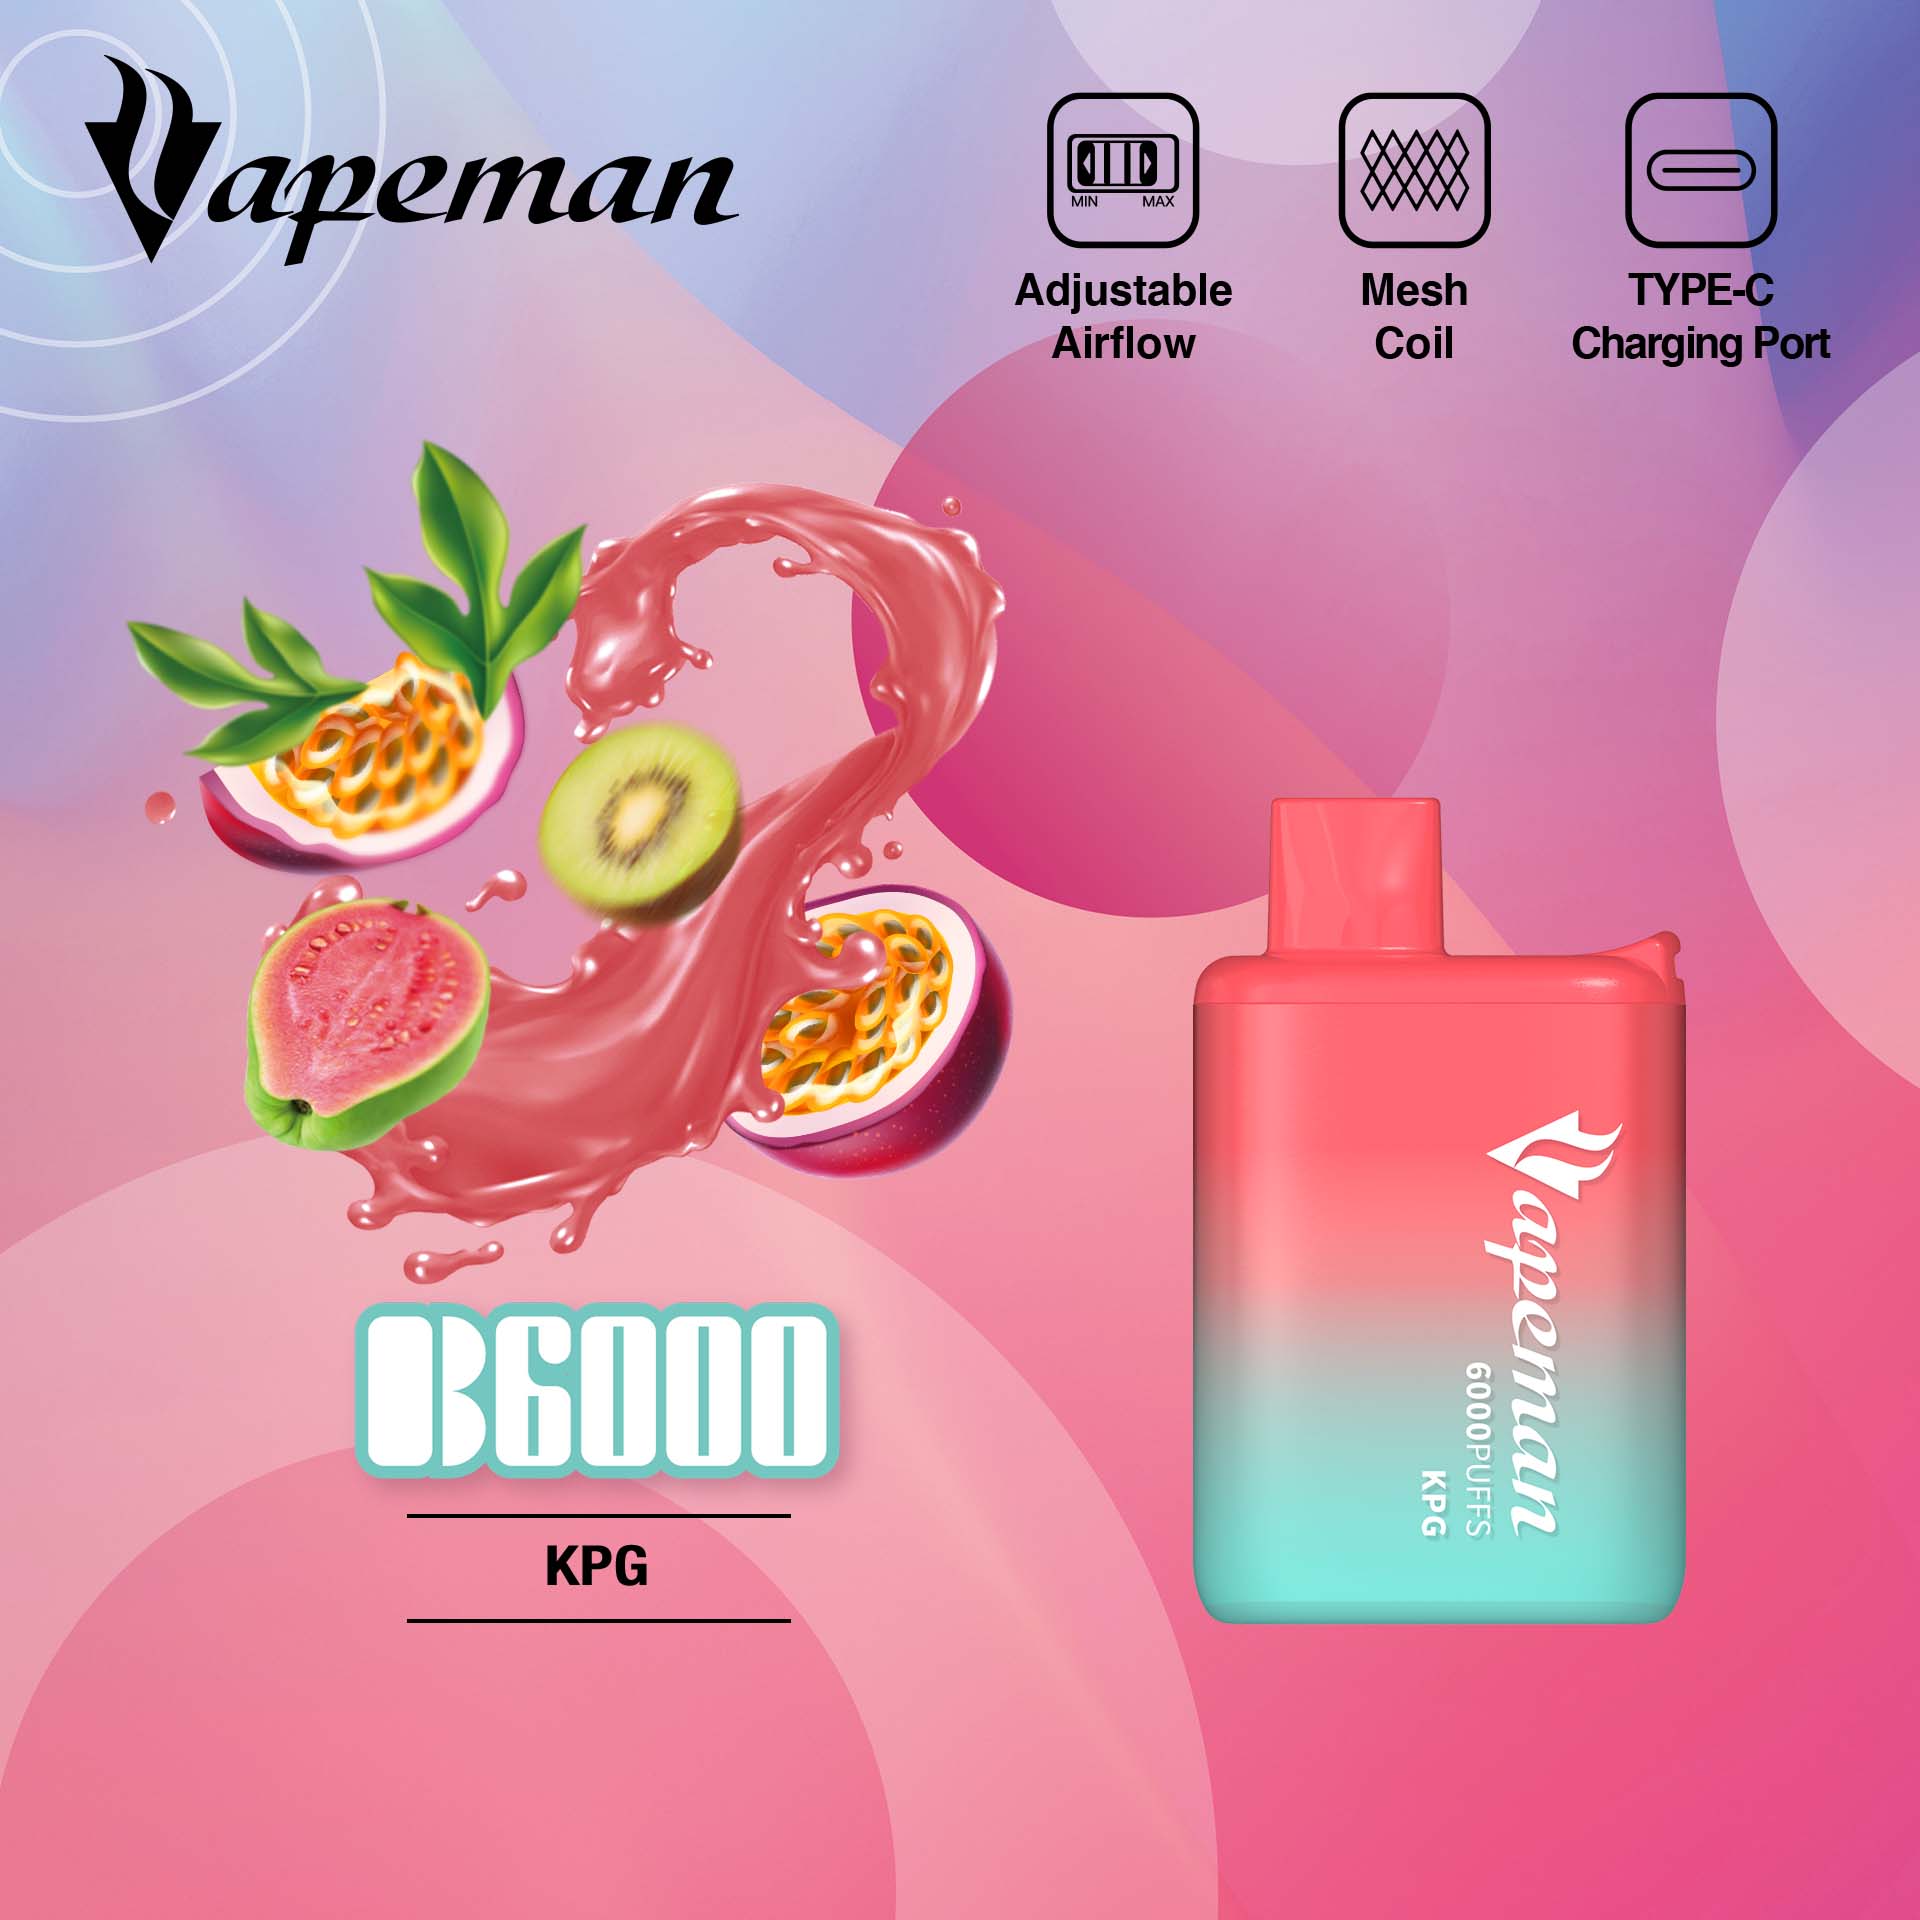 Vapeman - B6000 - KPG -  Disposable Vape Device - Salt Nicotine 